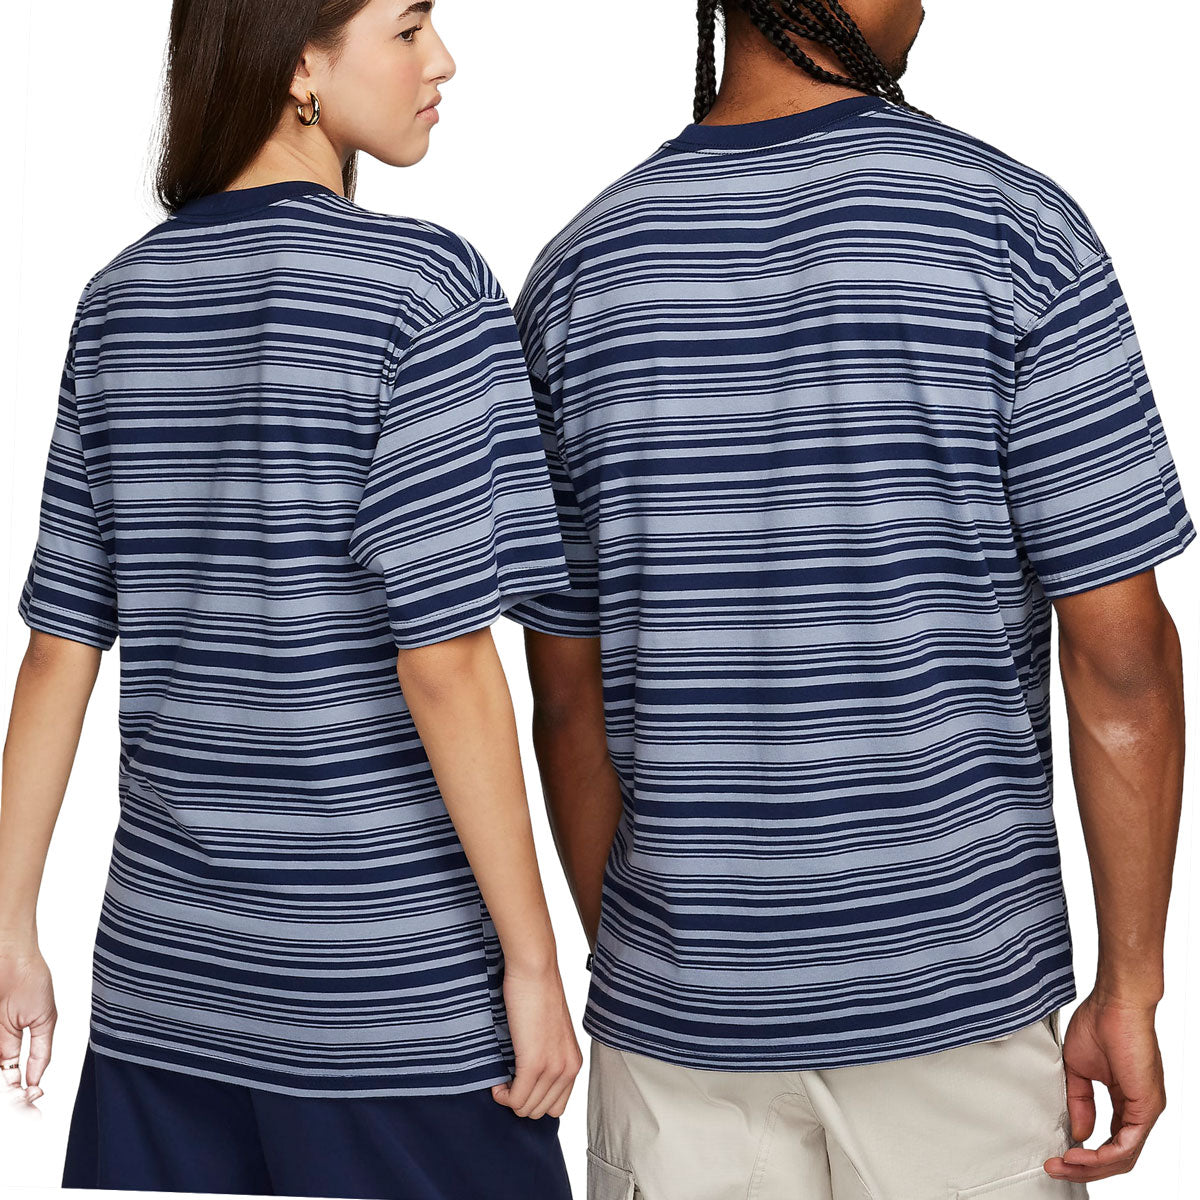 Nike SB Striped T-Shirt - Ashen Slate image 3